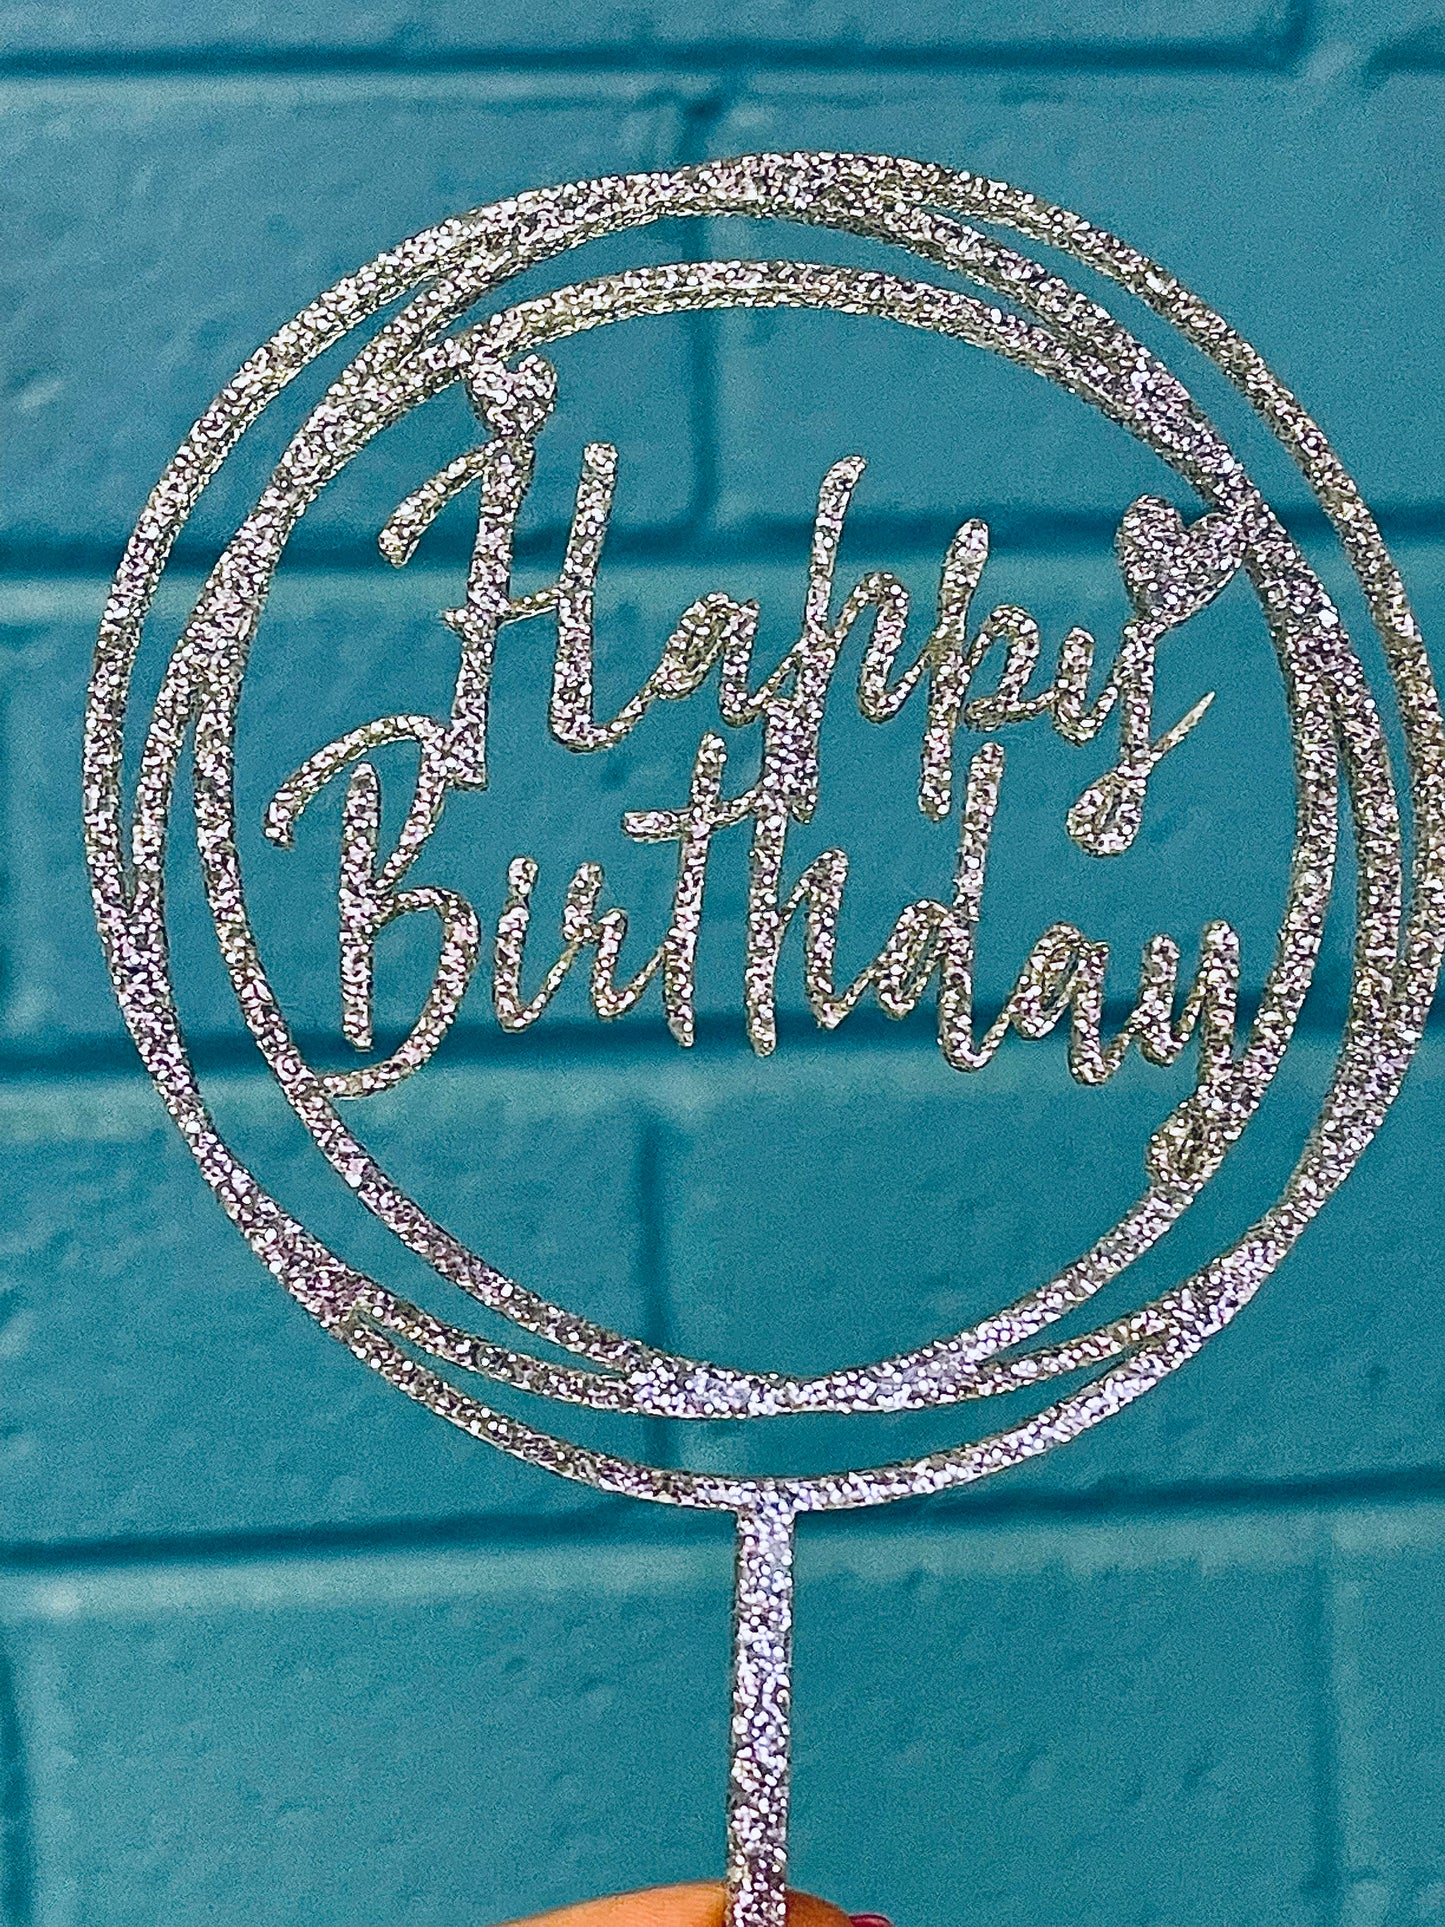 Birthday Cake topper - personalised